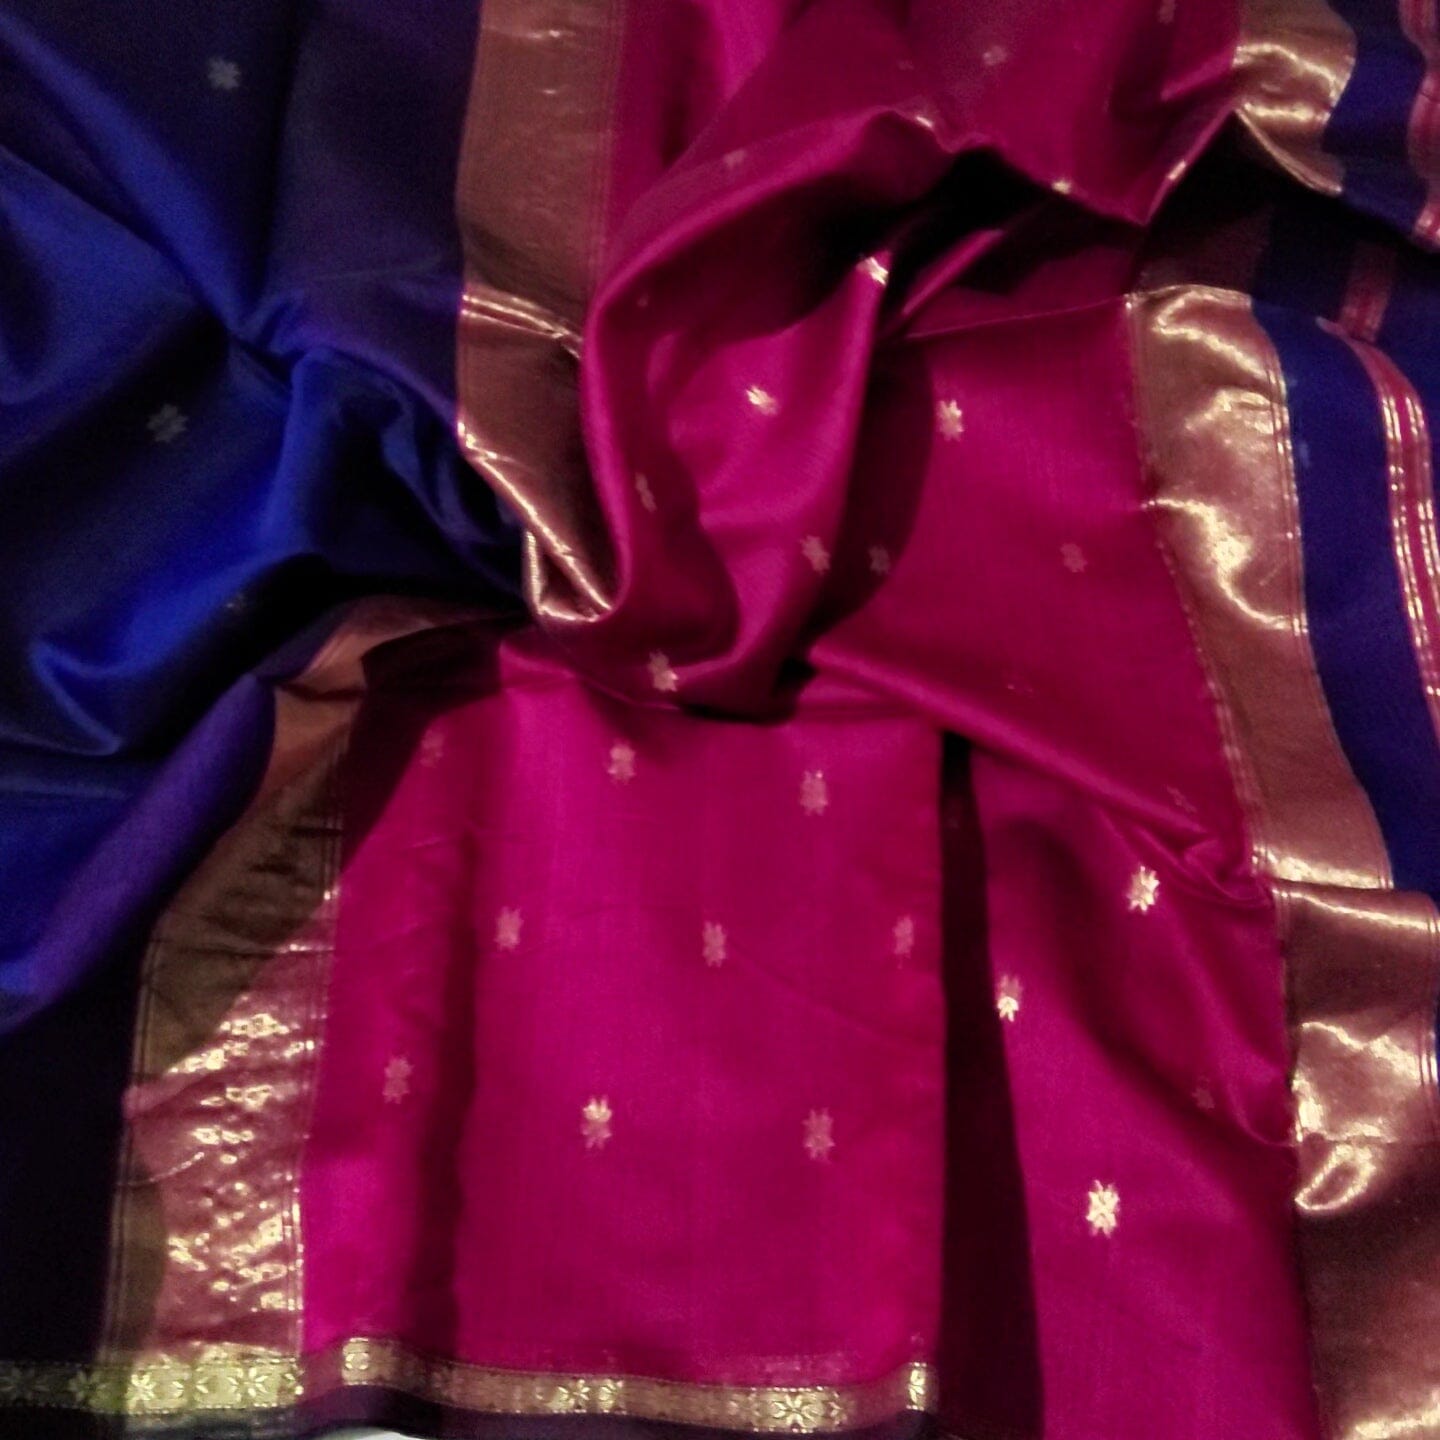 Maheshwari Silk Handloom Saree with All Over Bootis